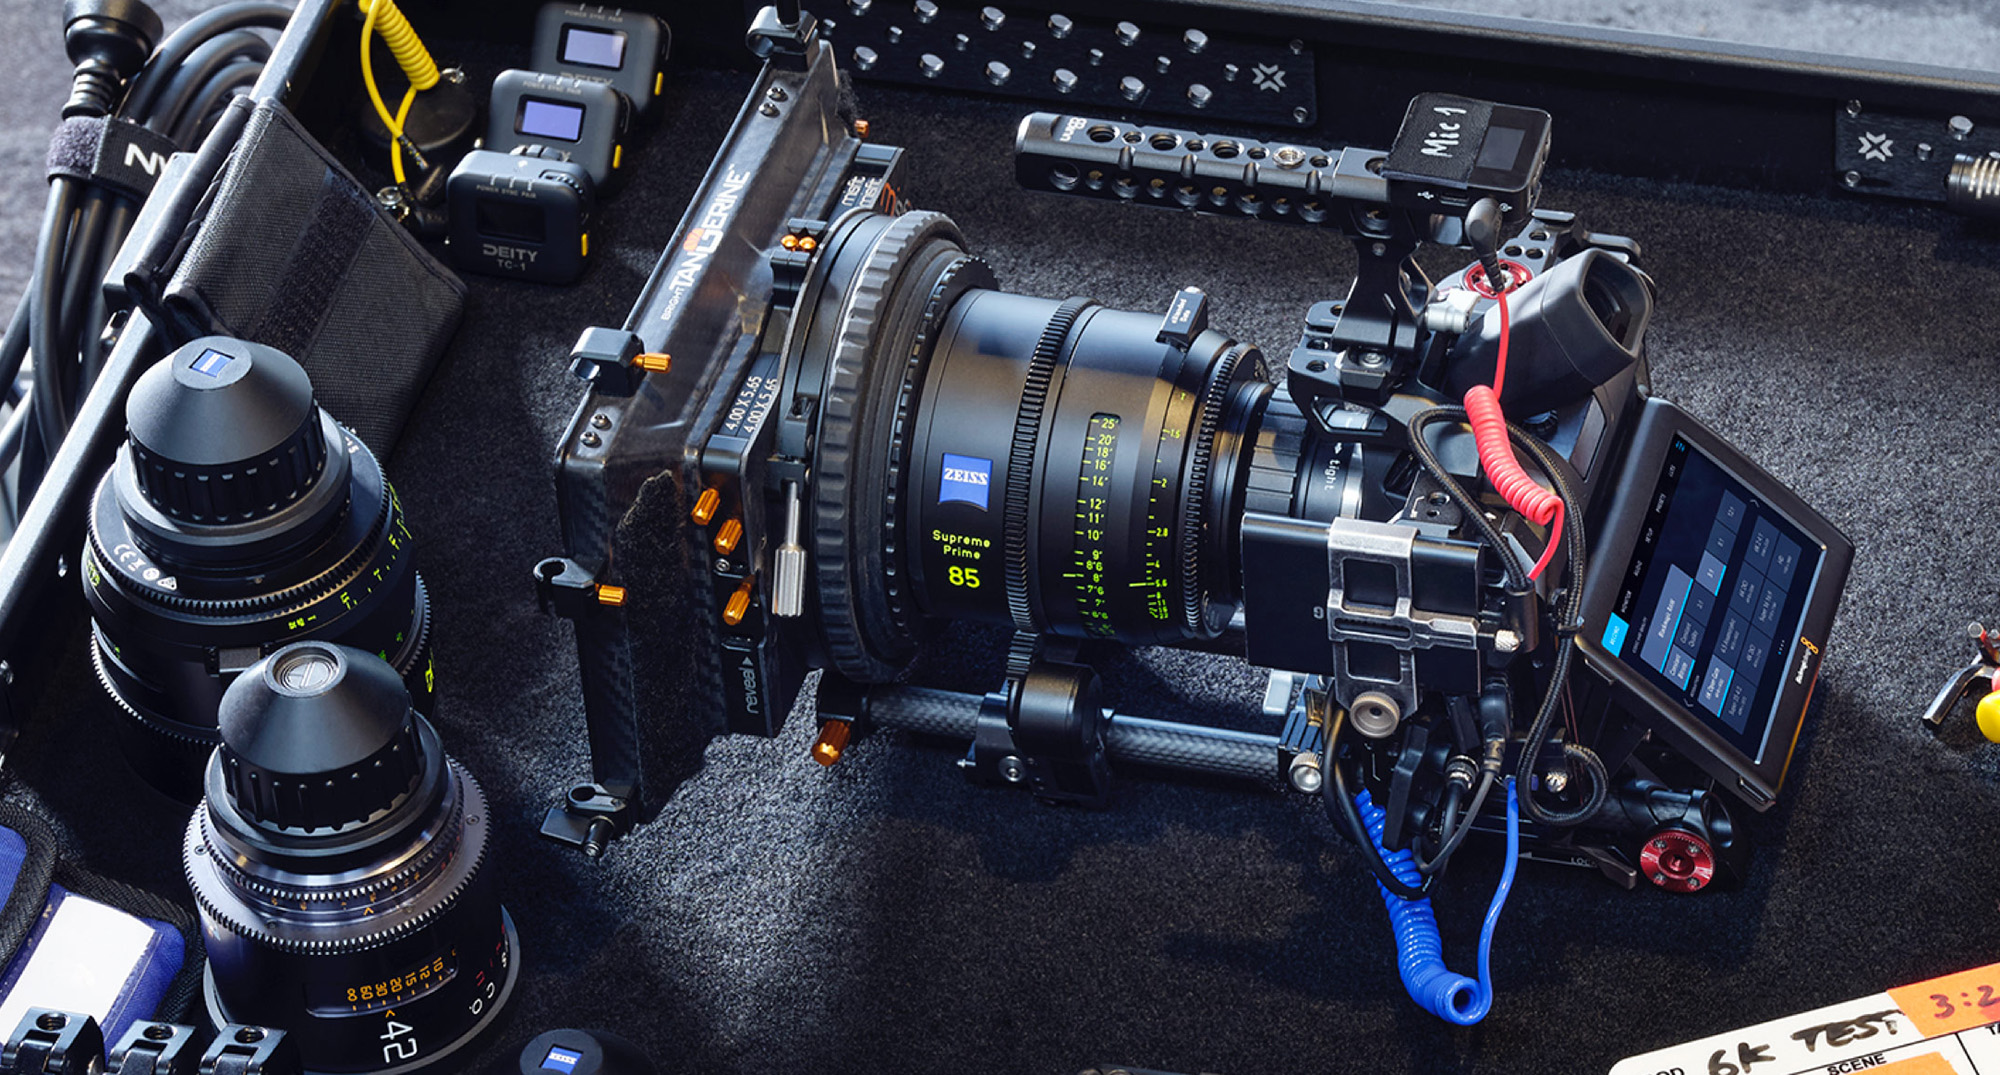 Review: Blackmagic Cinema Camera 6K - Blackmagic Design Expands Its Cinema Camera Lineup 15